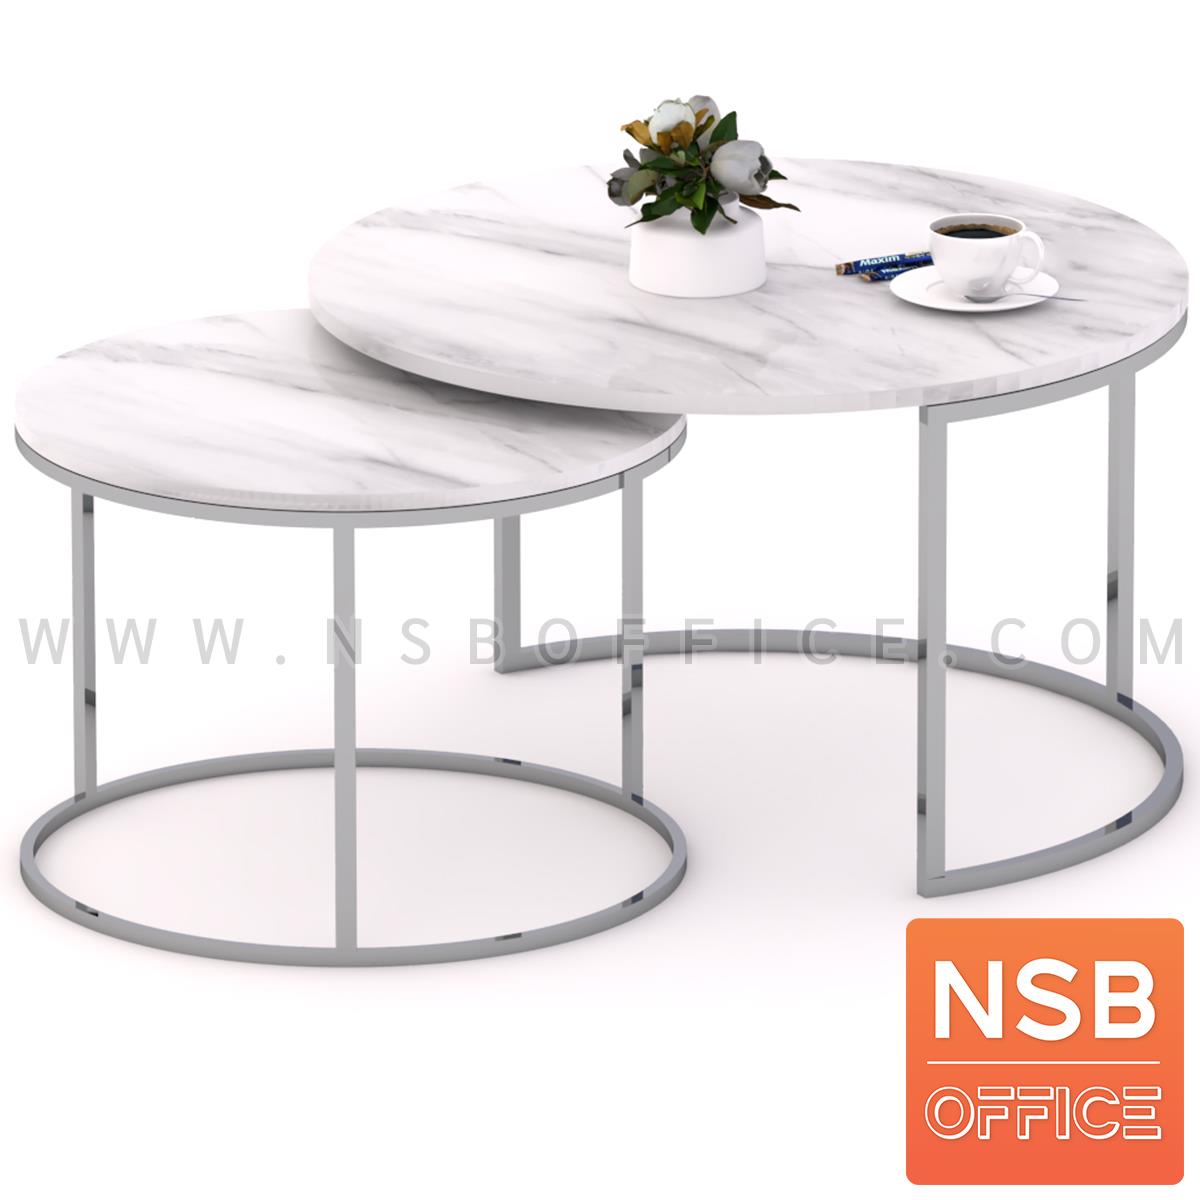 B13A302:โต๊ะกลางหินอ่อนสีขาว รุ่น Lightup (ไลท์อัพ)  ขาสแตนเลสเงิน